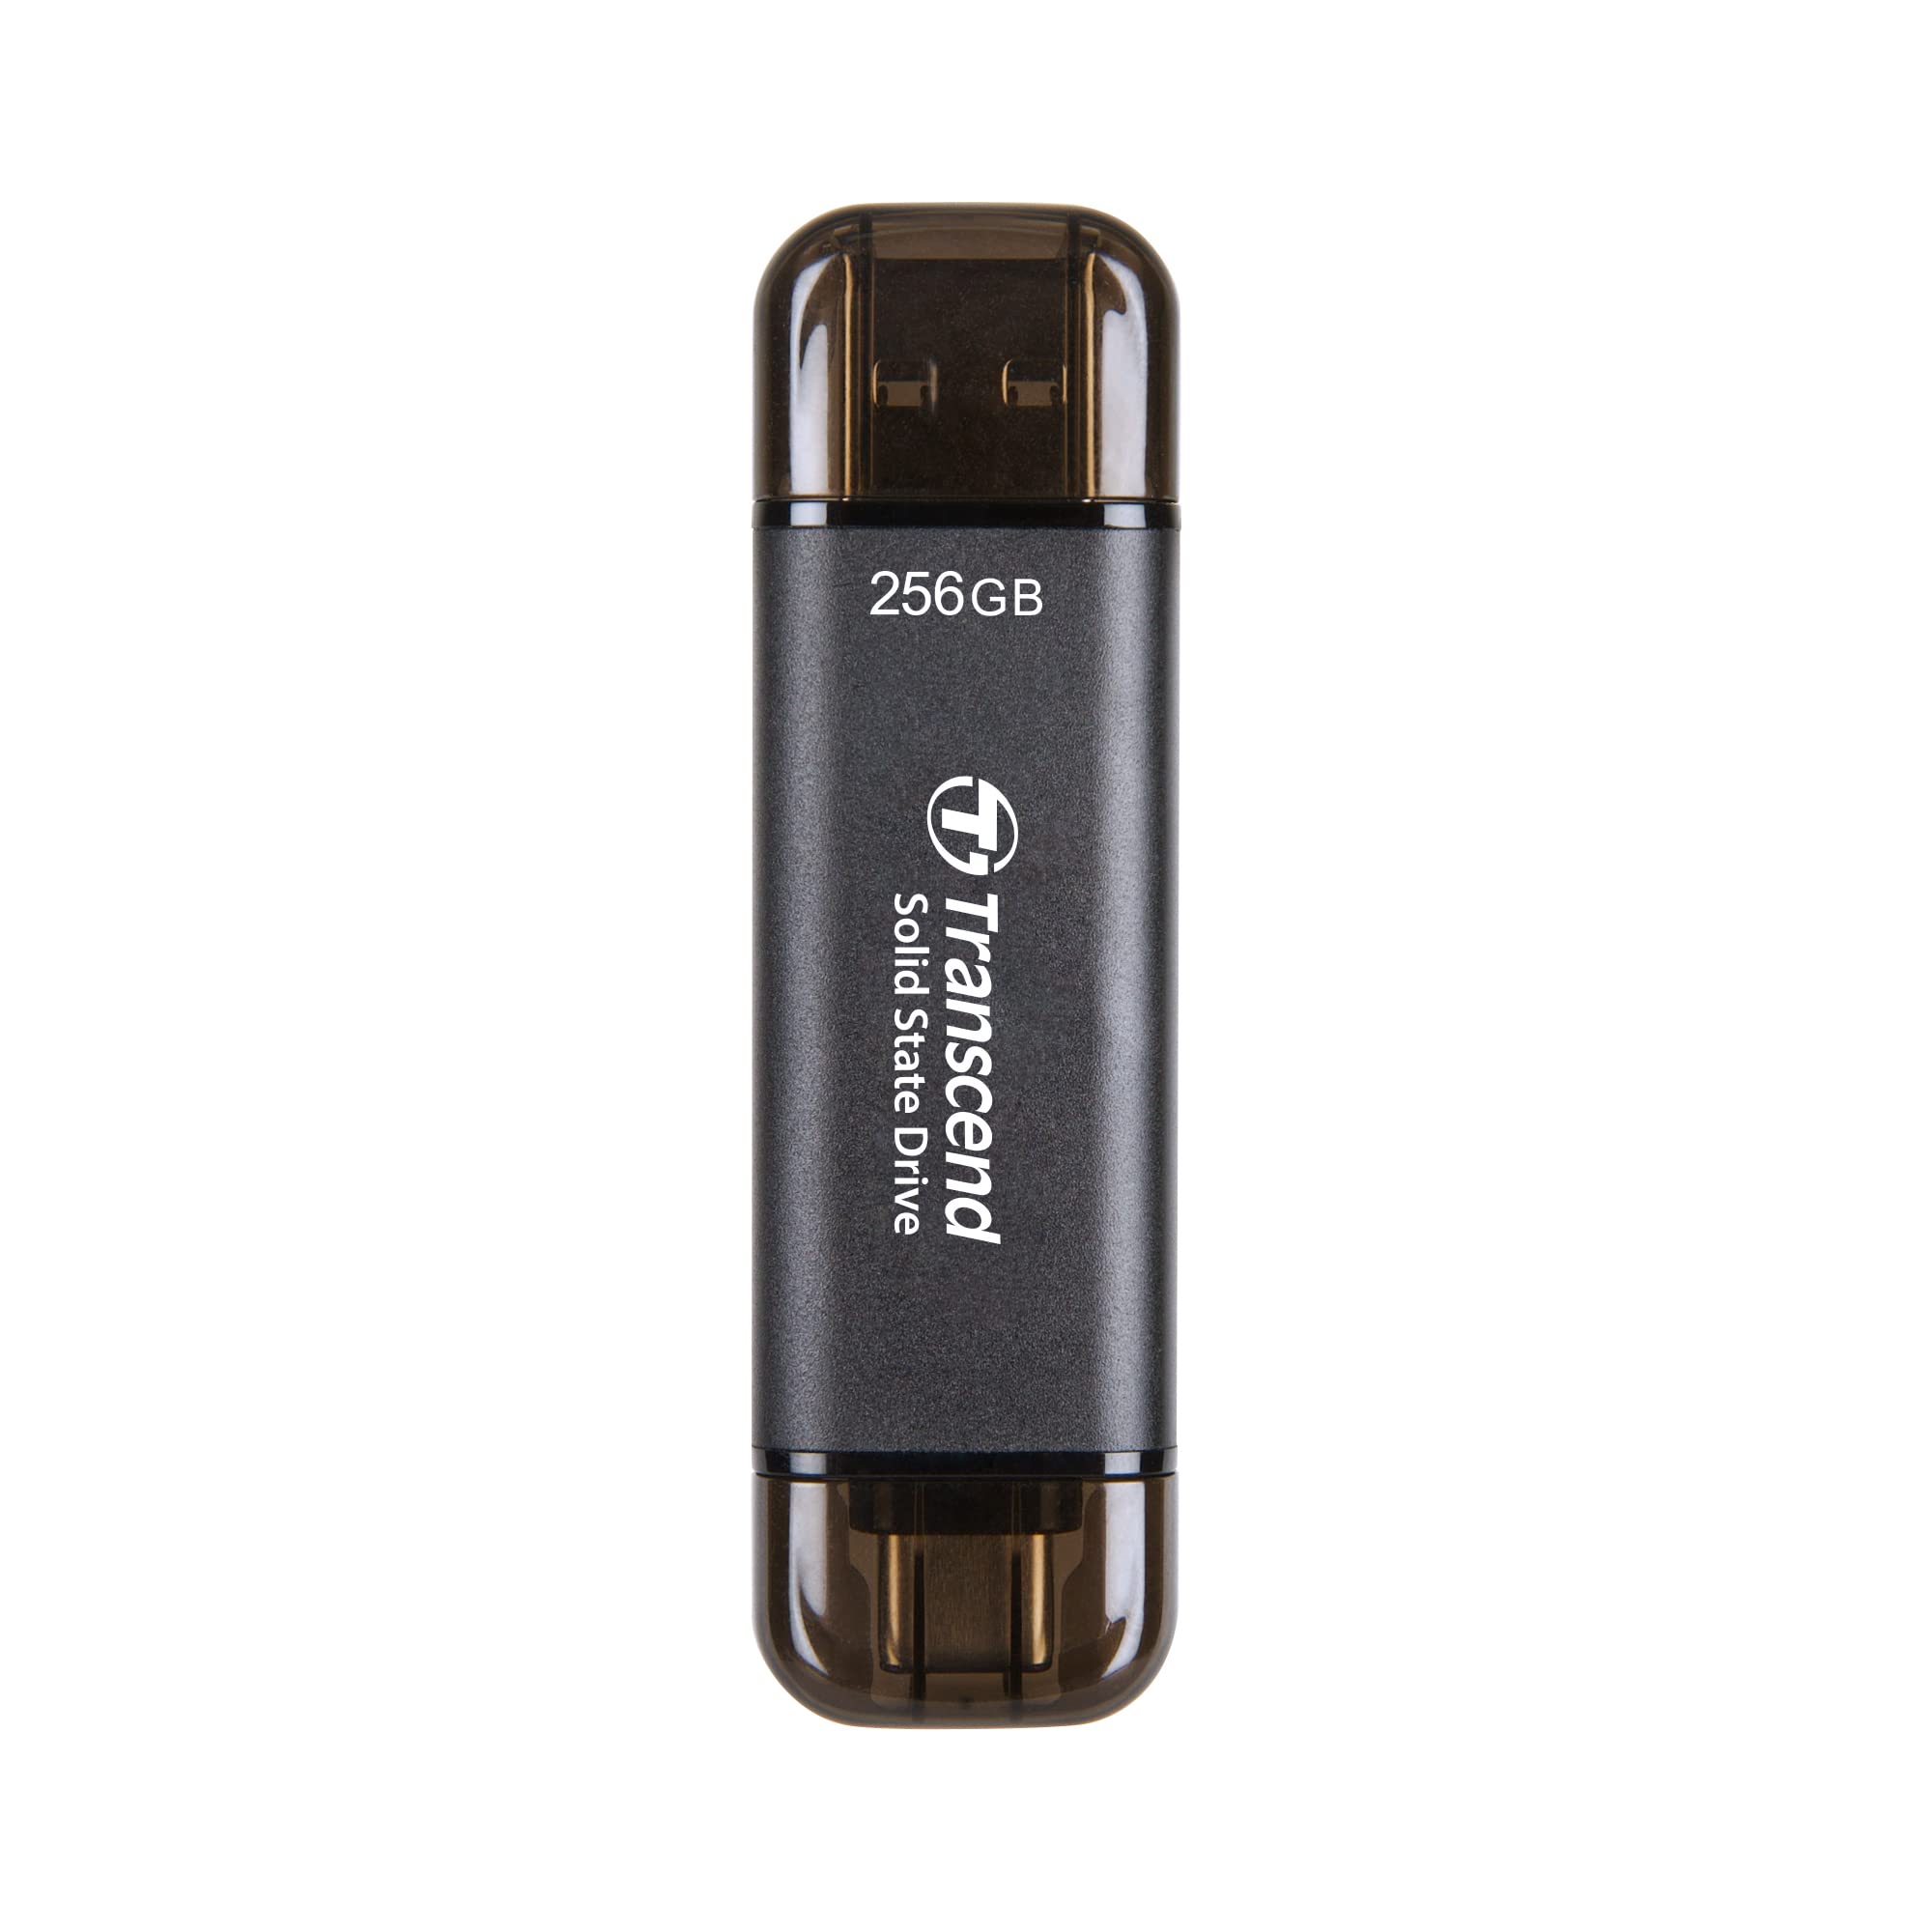 256GB EXTERNAL SSD ESD310C USB